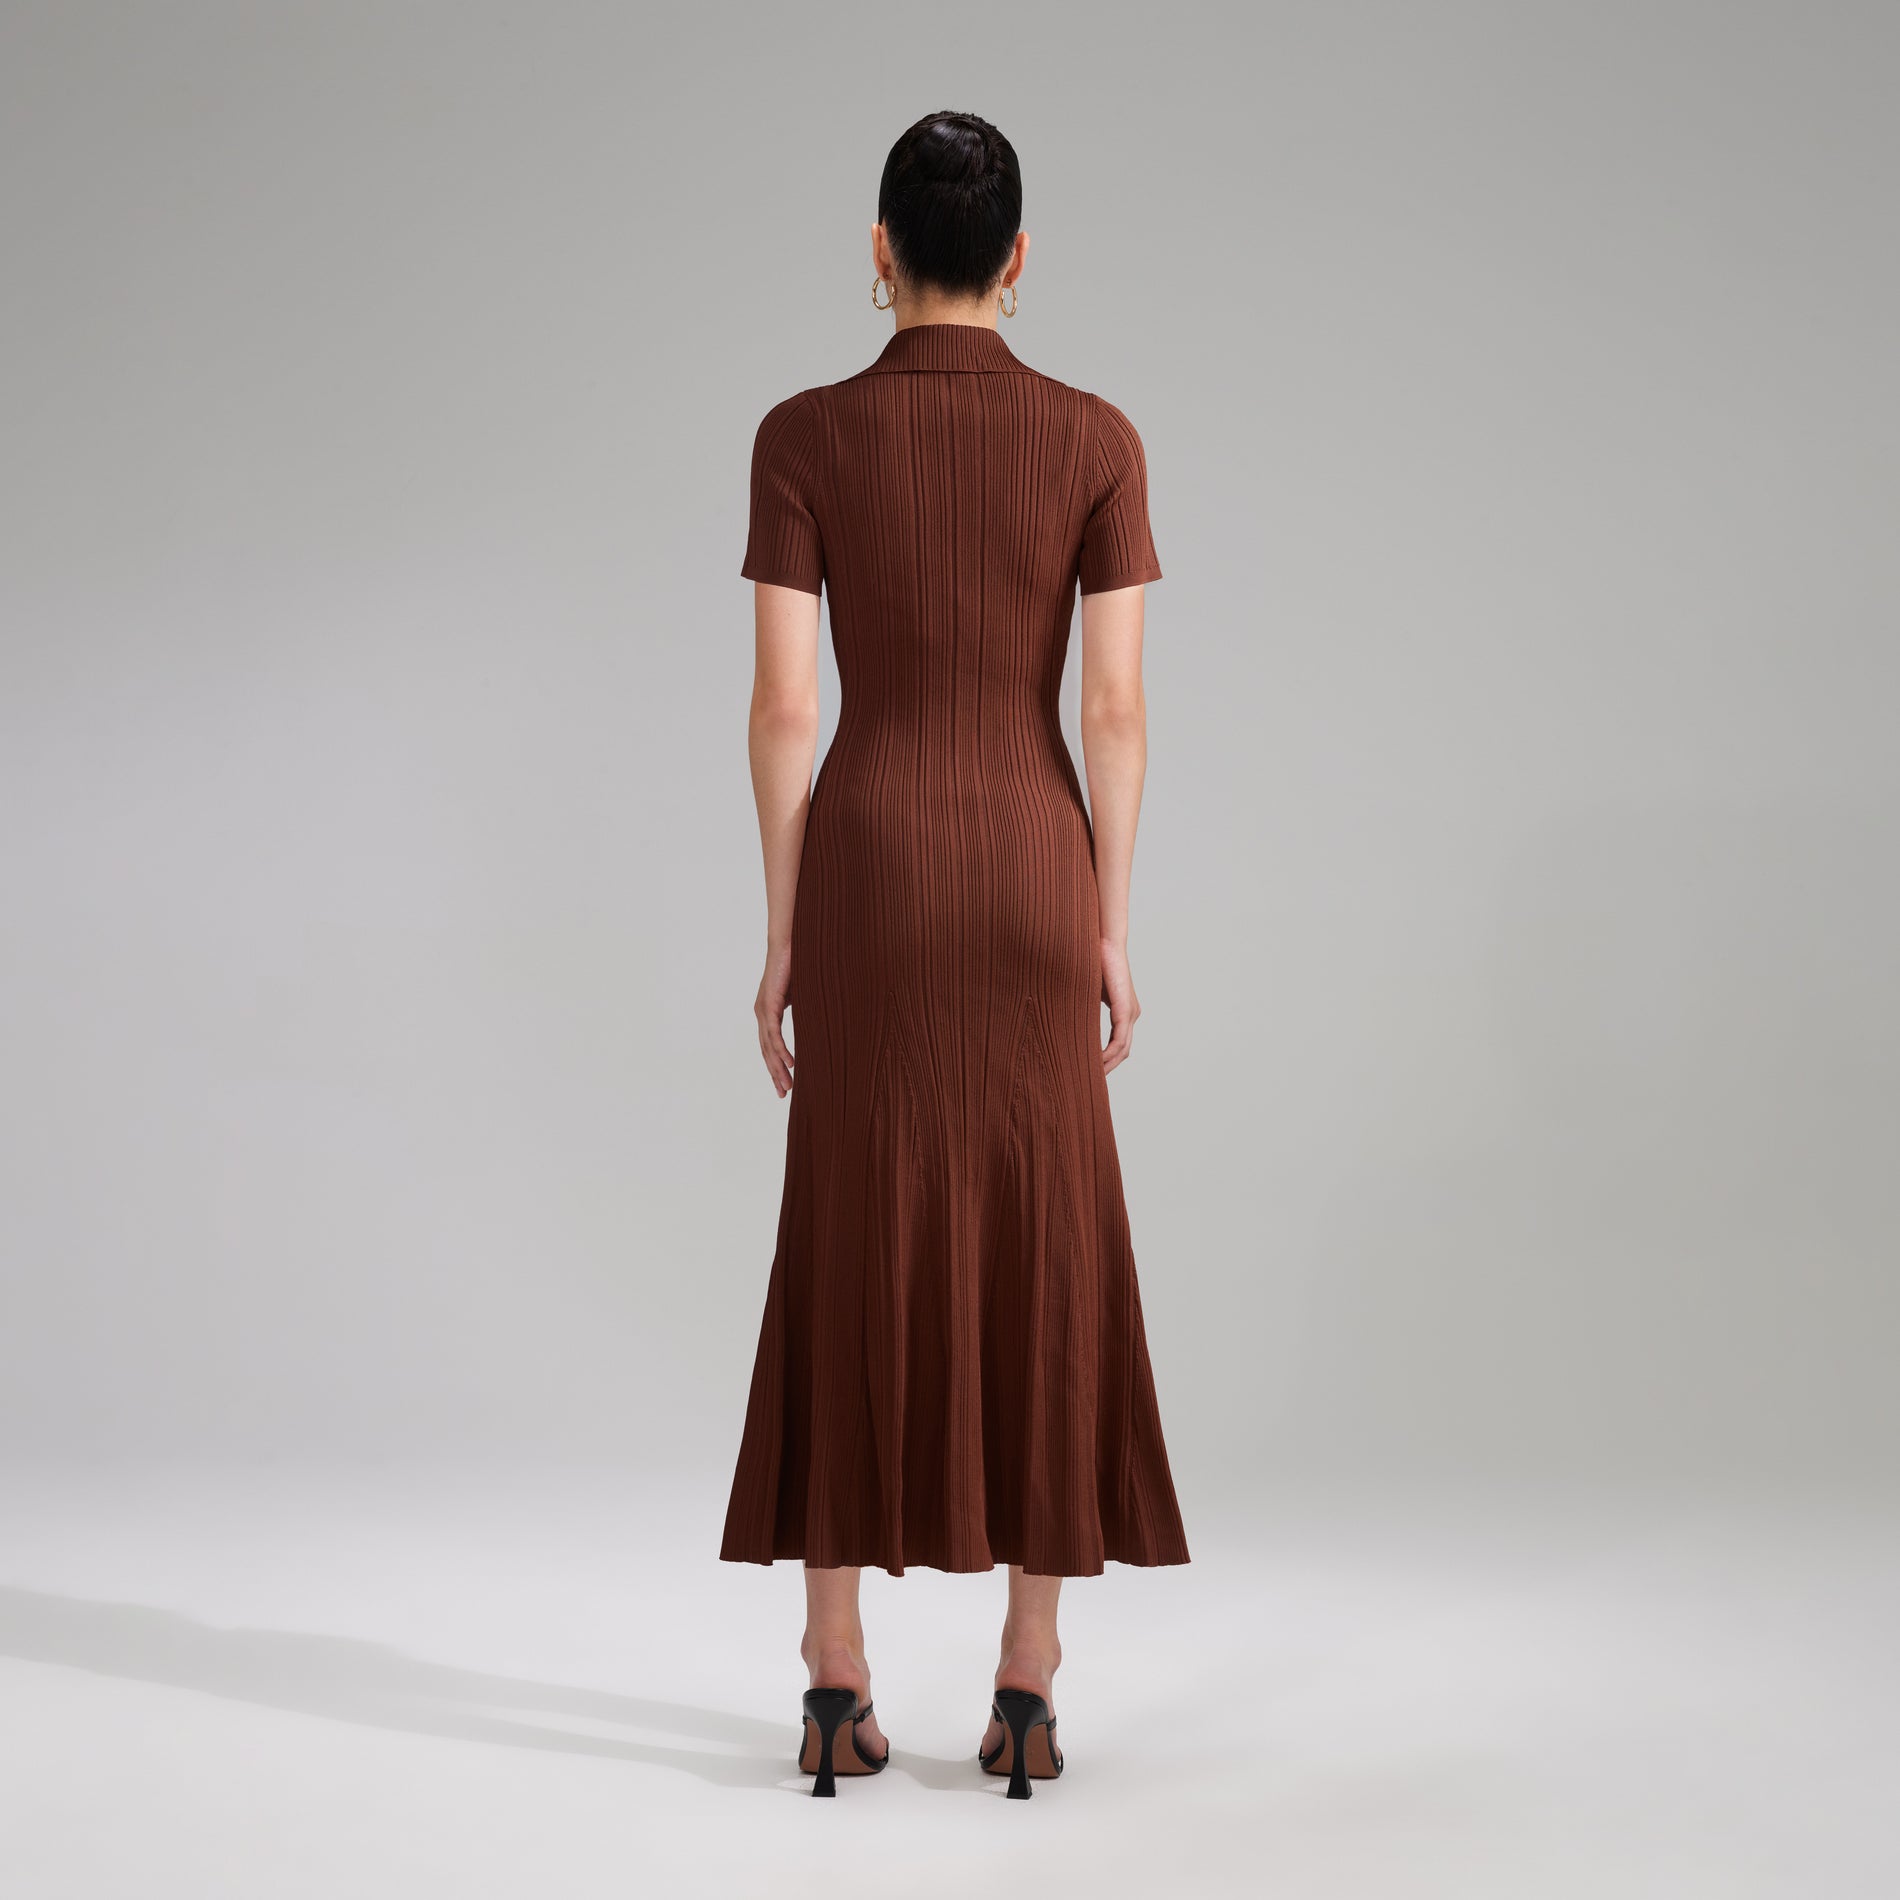 A woman wearing the Brown Viscose Knit Midi Dress